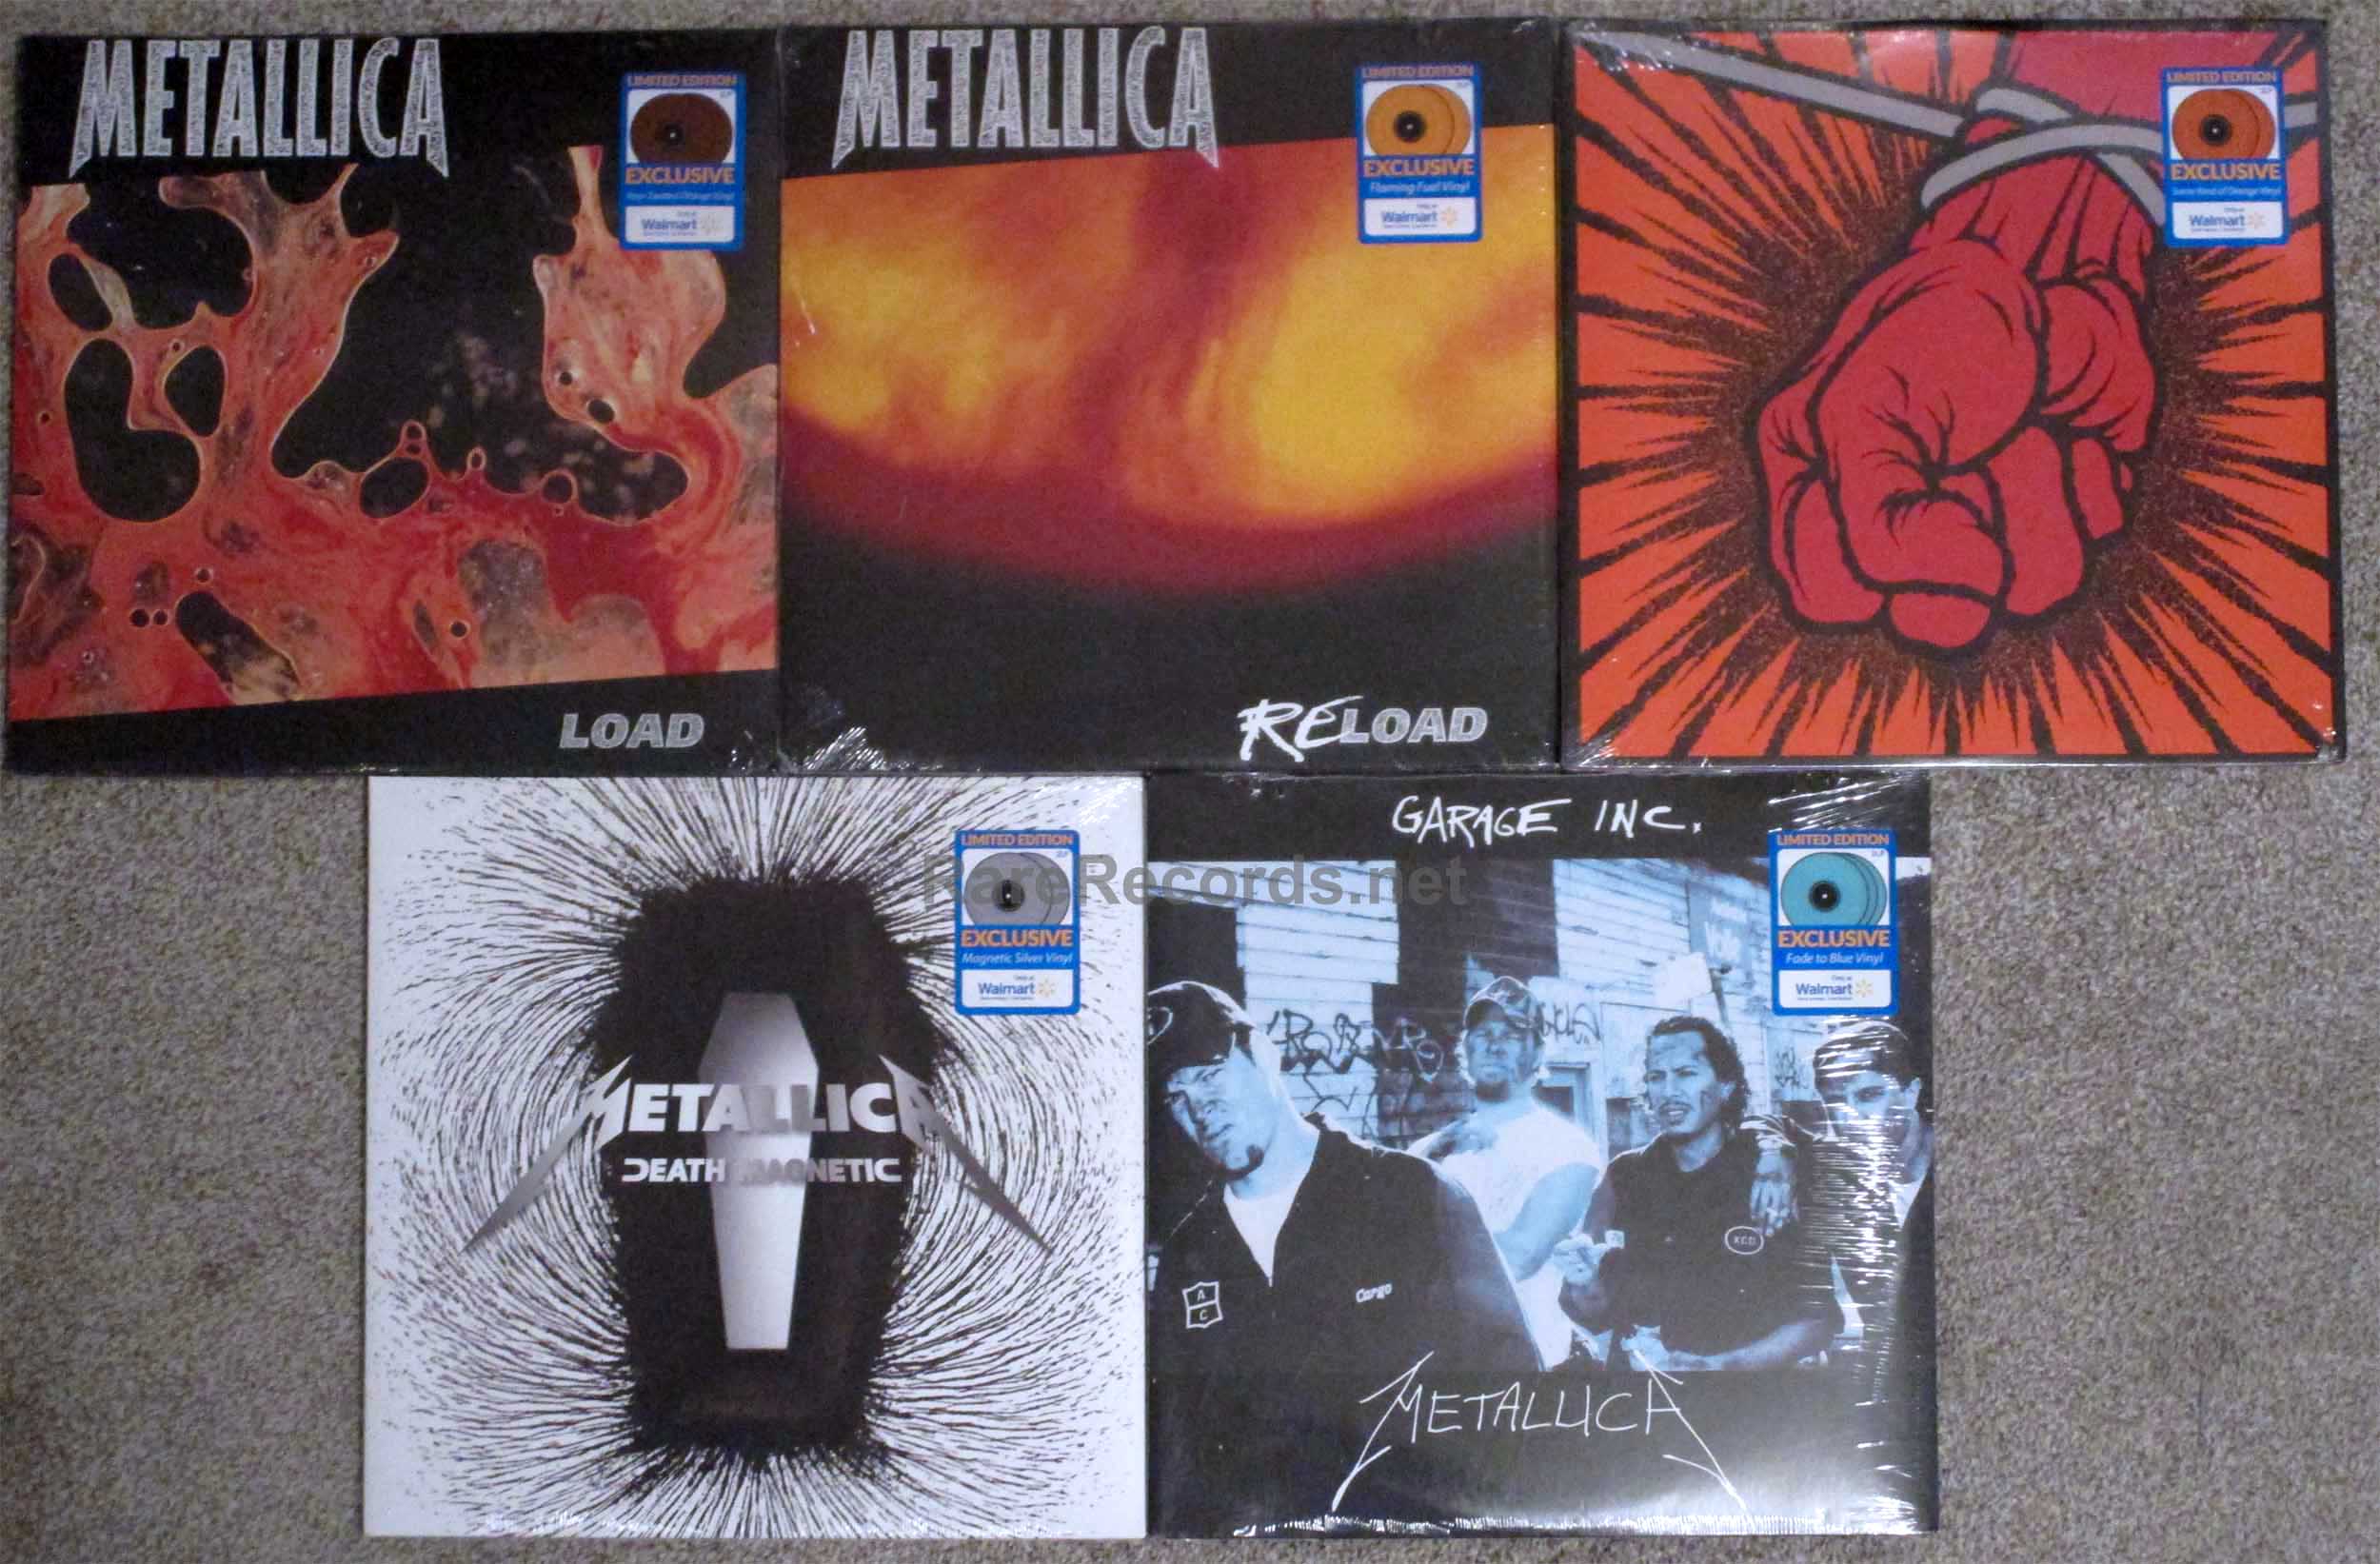 Metallica - Set of 11 sealed U.S. colored vinyl Walmart LPs